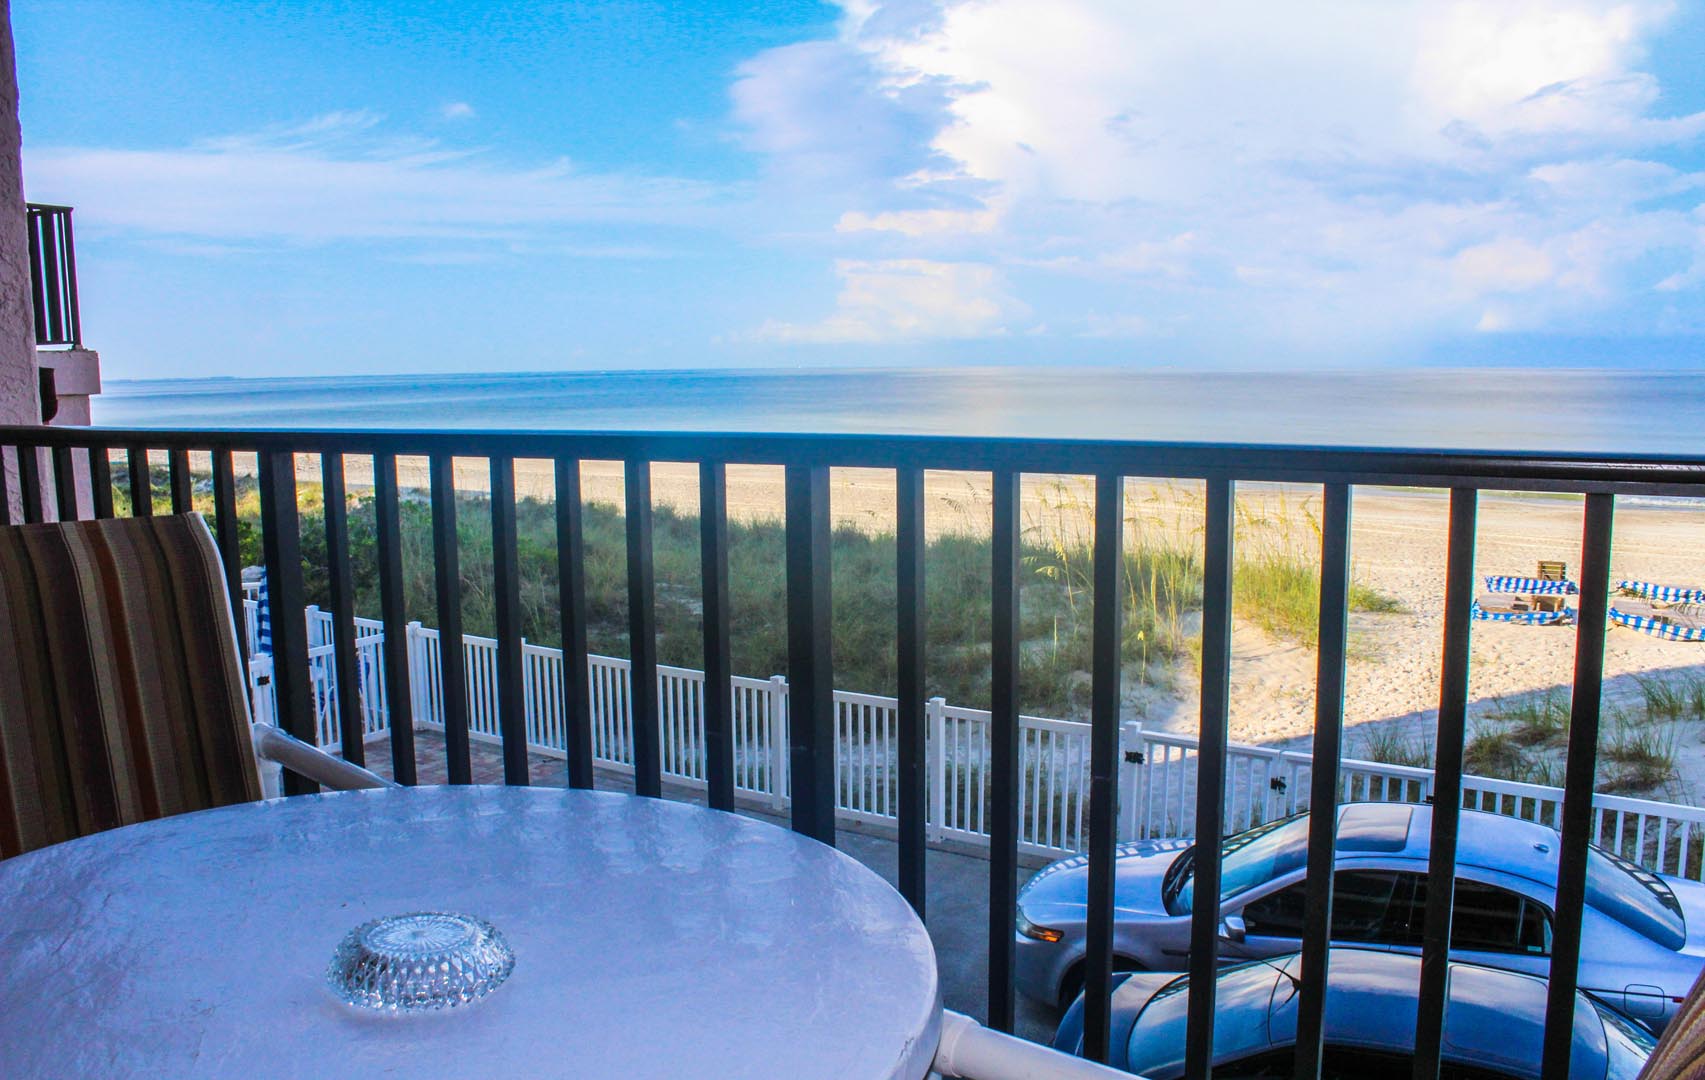 A balcony facing the beach  at VRI's Island Gulf Resort in Madeira Beach, Florida.